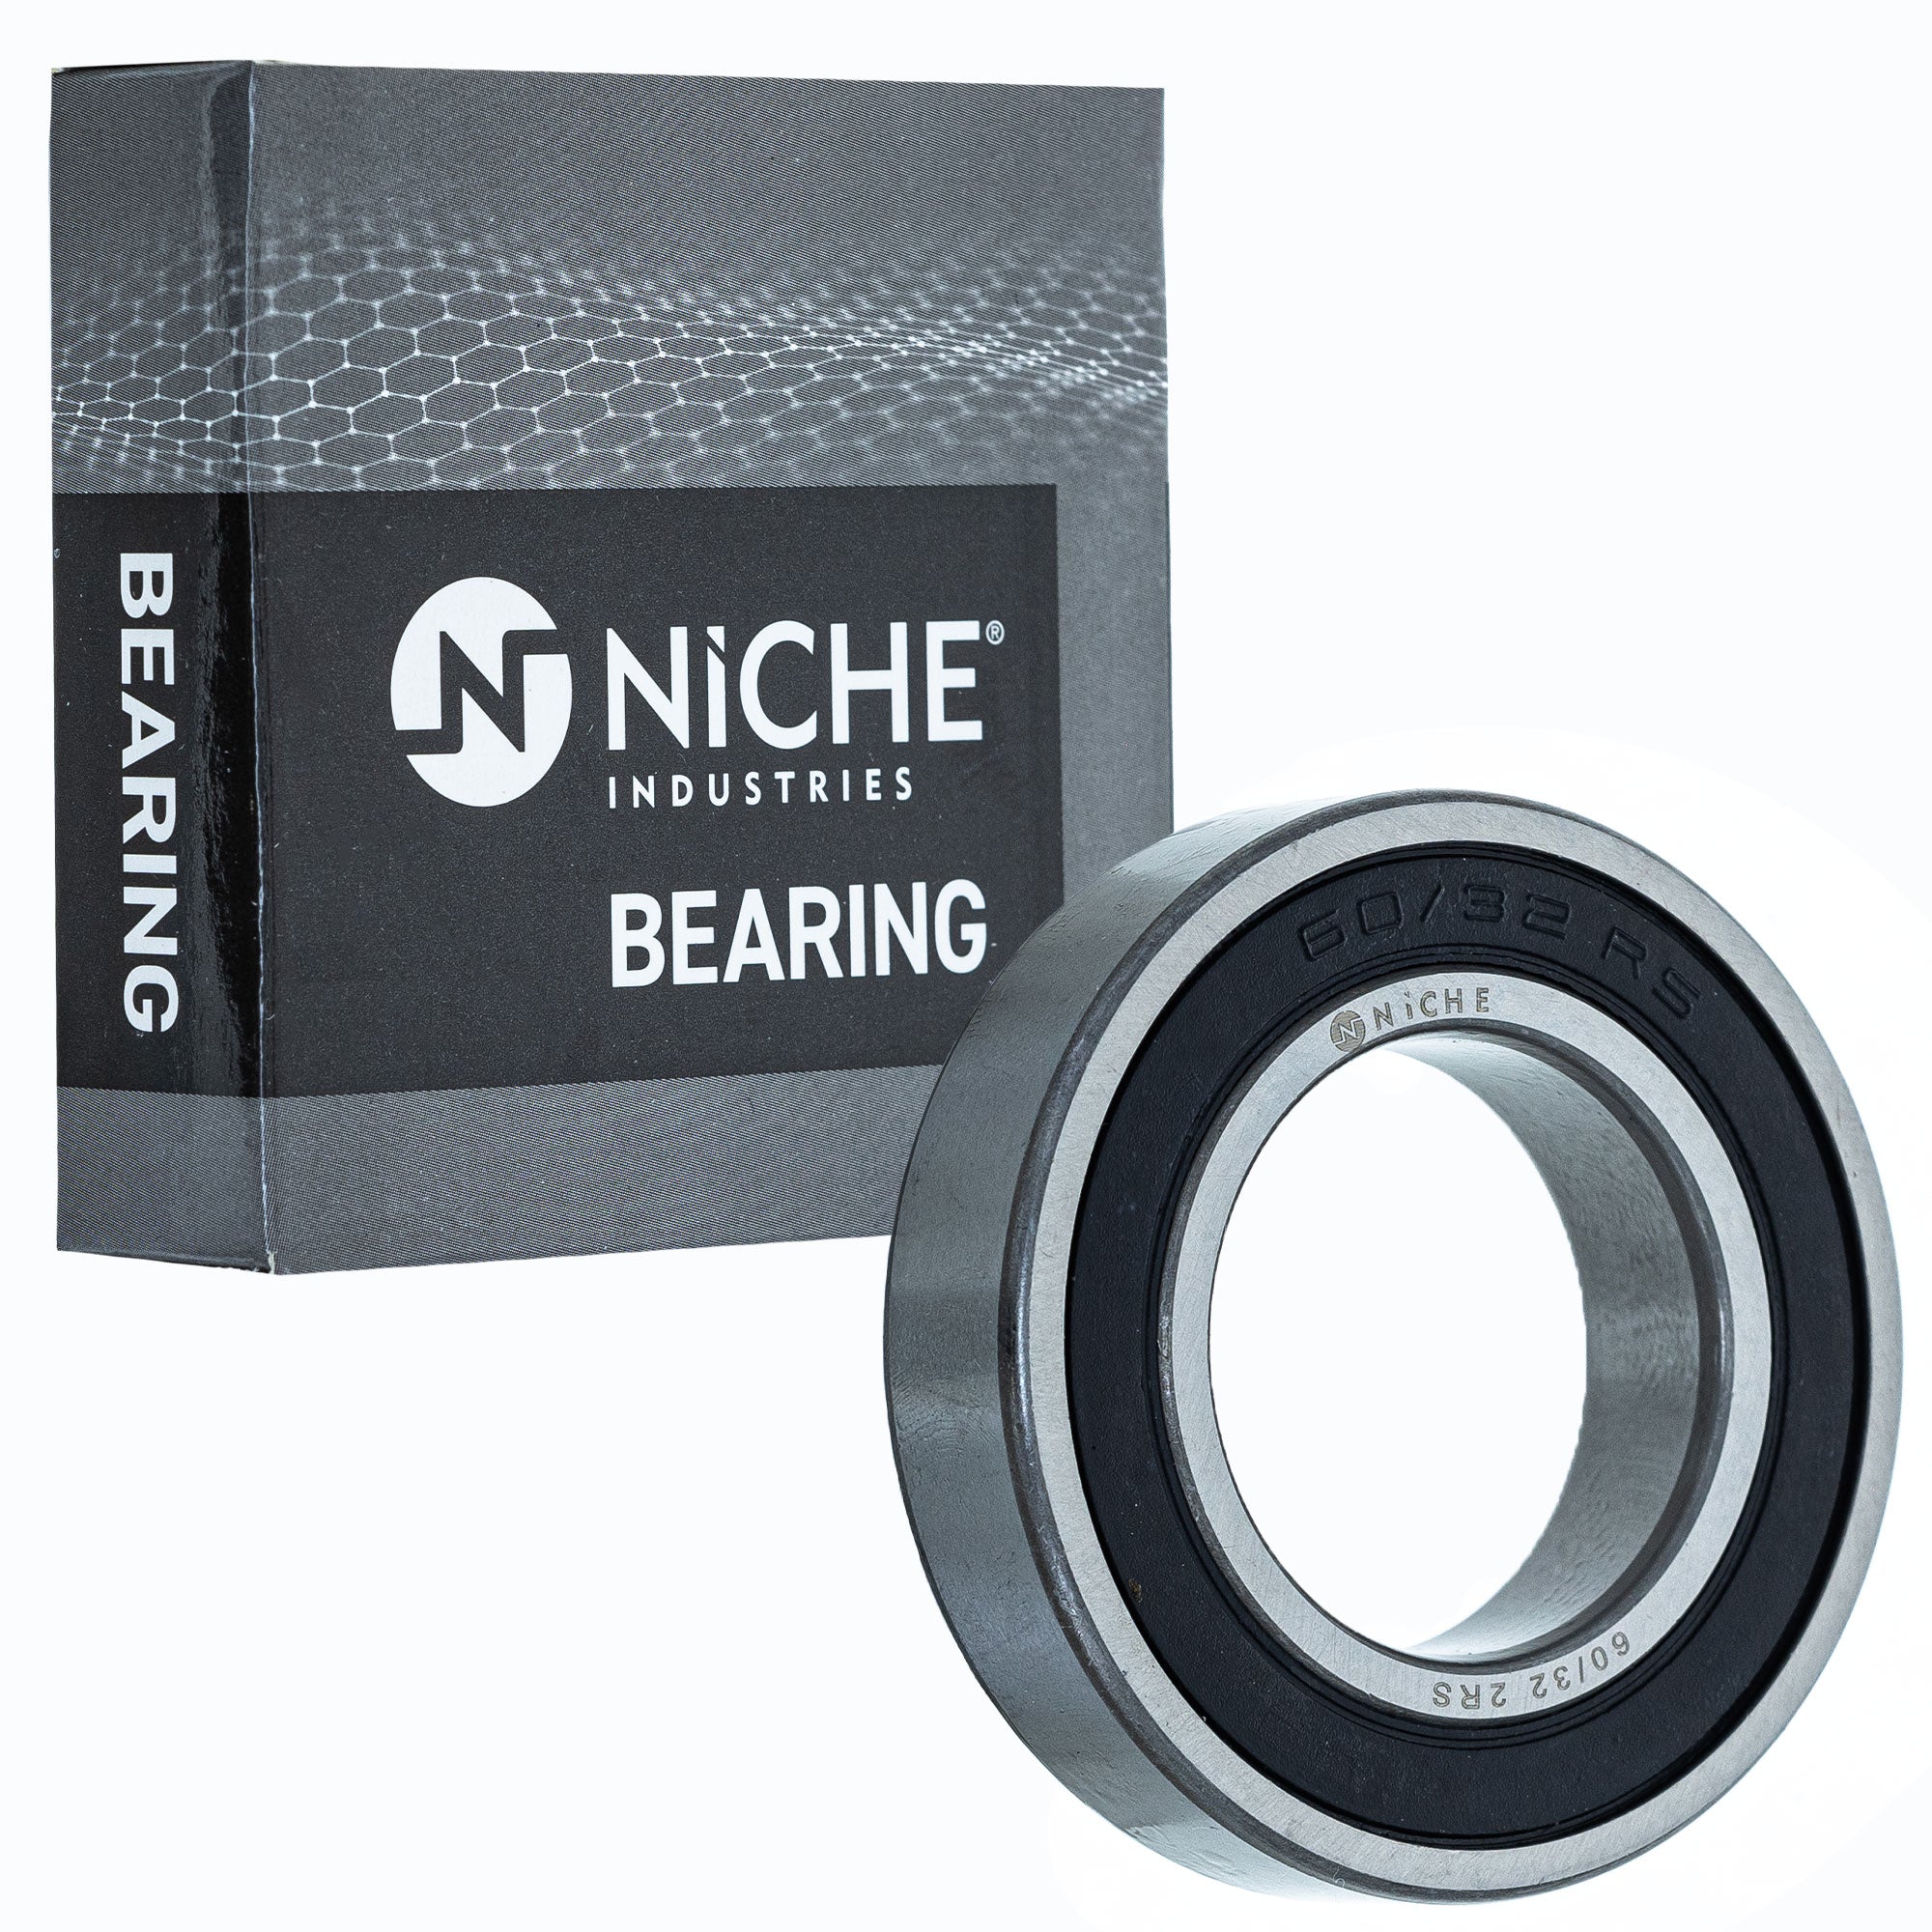 NICHE 519-CBB2233R Bearing 10-Pack for zOTHER TRX90X TRX250X TL1000S